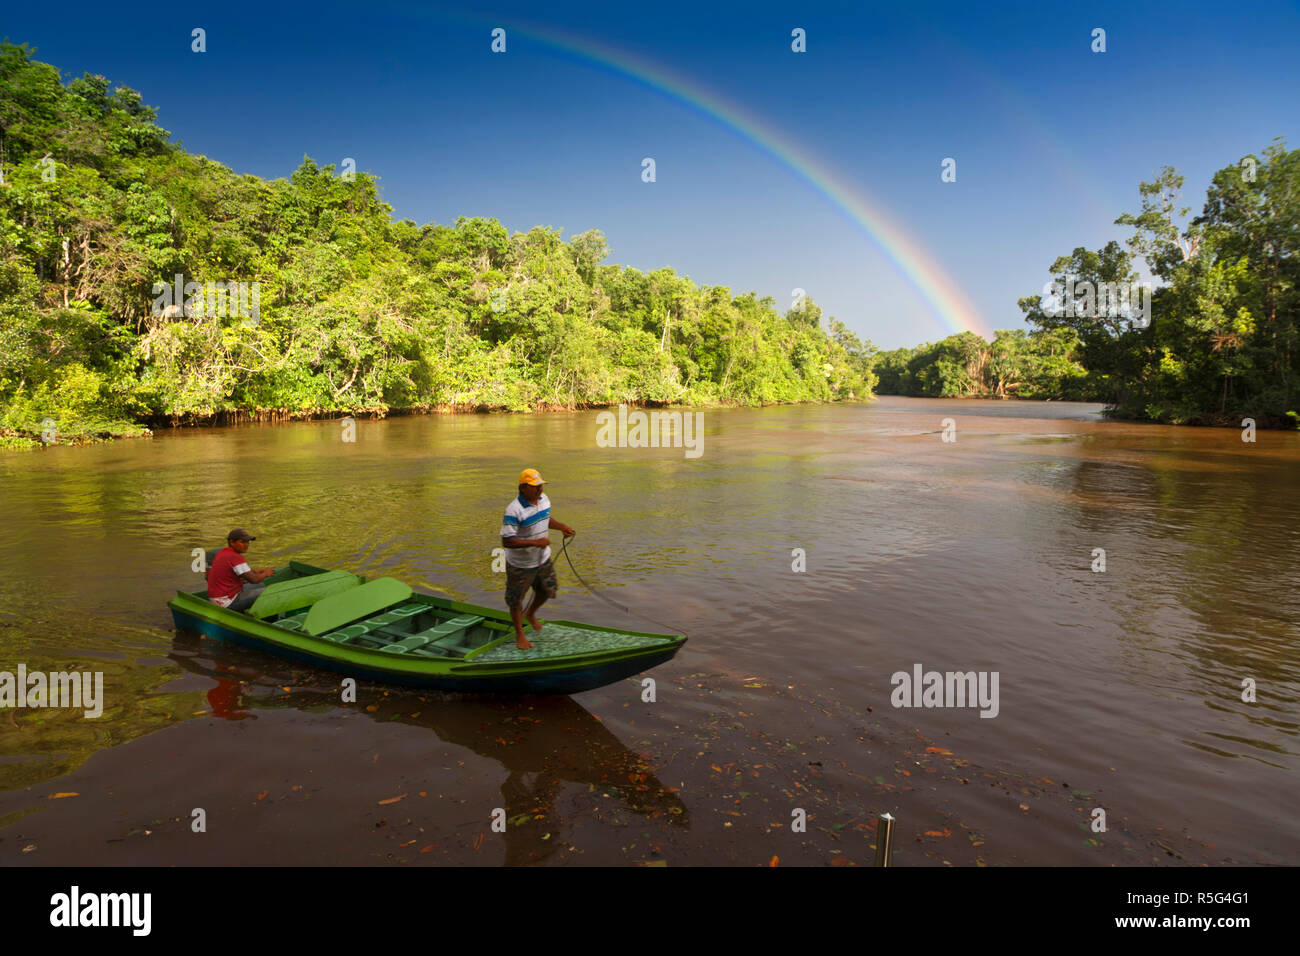 Venezuela, Delta Amacuro, Orinoco Delta, Warao People in boat on Nararina river with rainbow in stormy sky Stock Photo